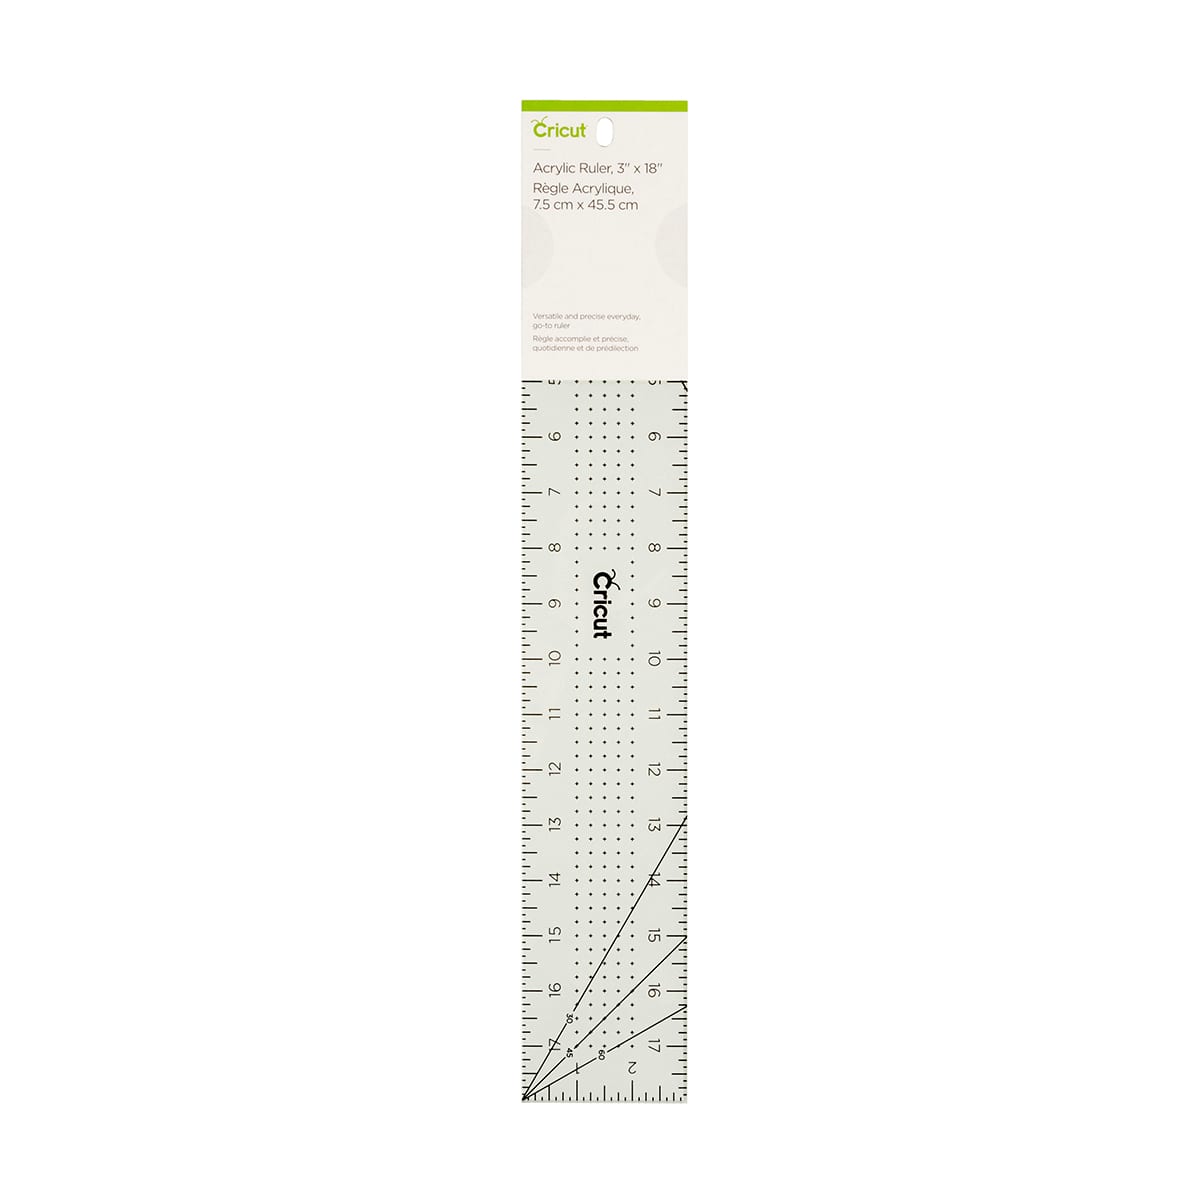 Cricut Acrylic Ruler, 3 x 18,White